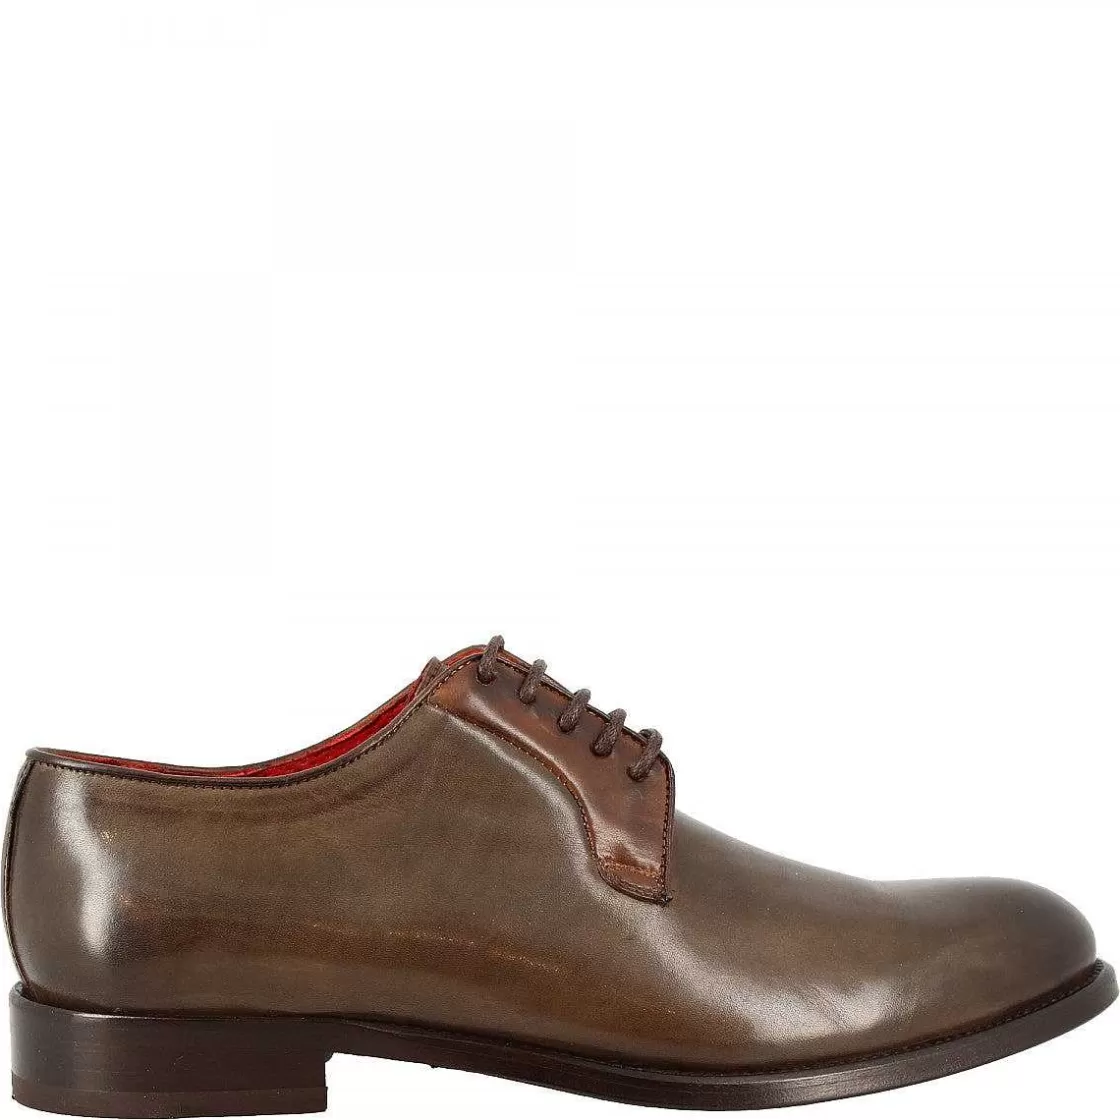 Leonardo Men'S Elegant Wholecut Oxford Shoes Handmade In Taupe Calf Leather Best Sale